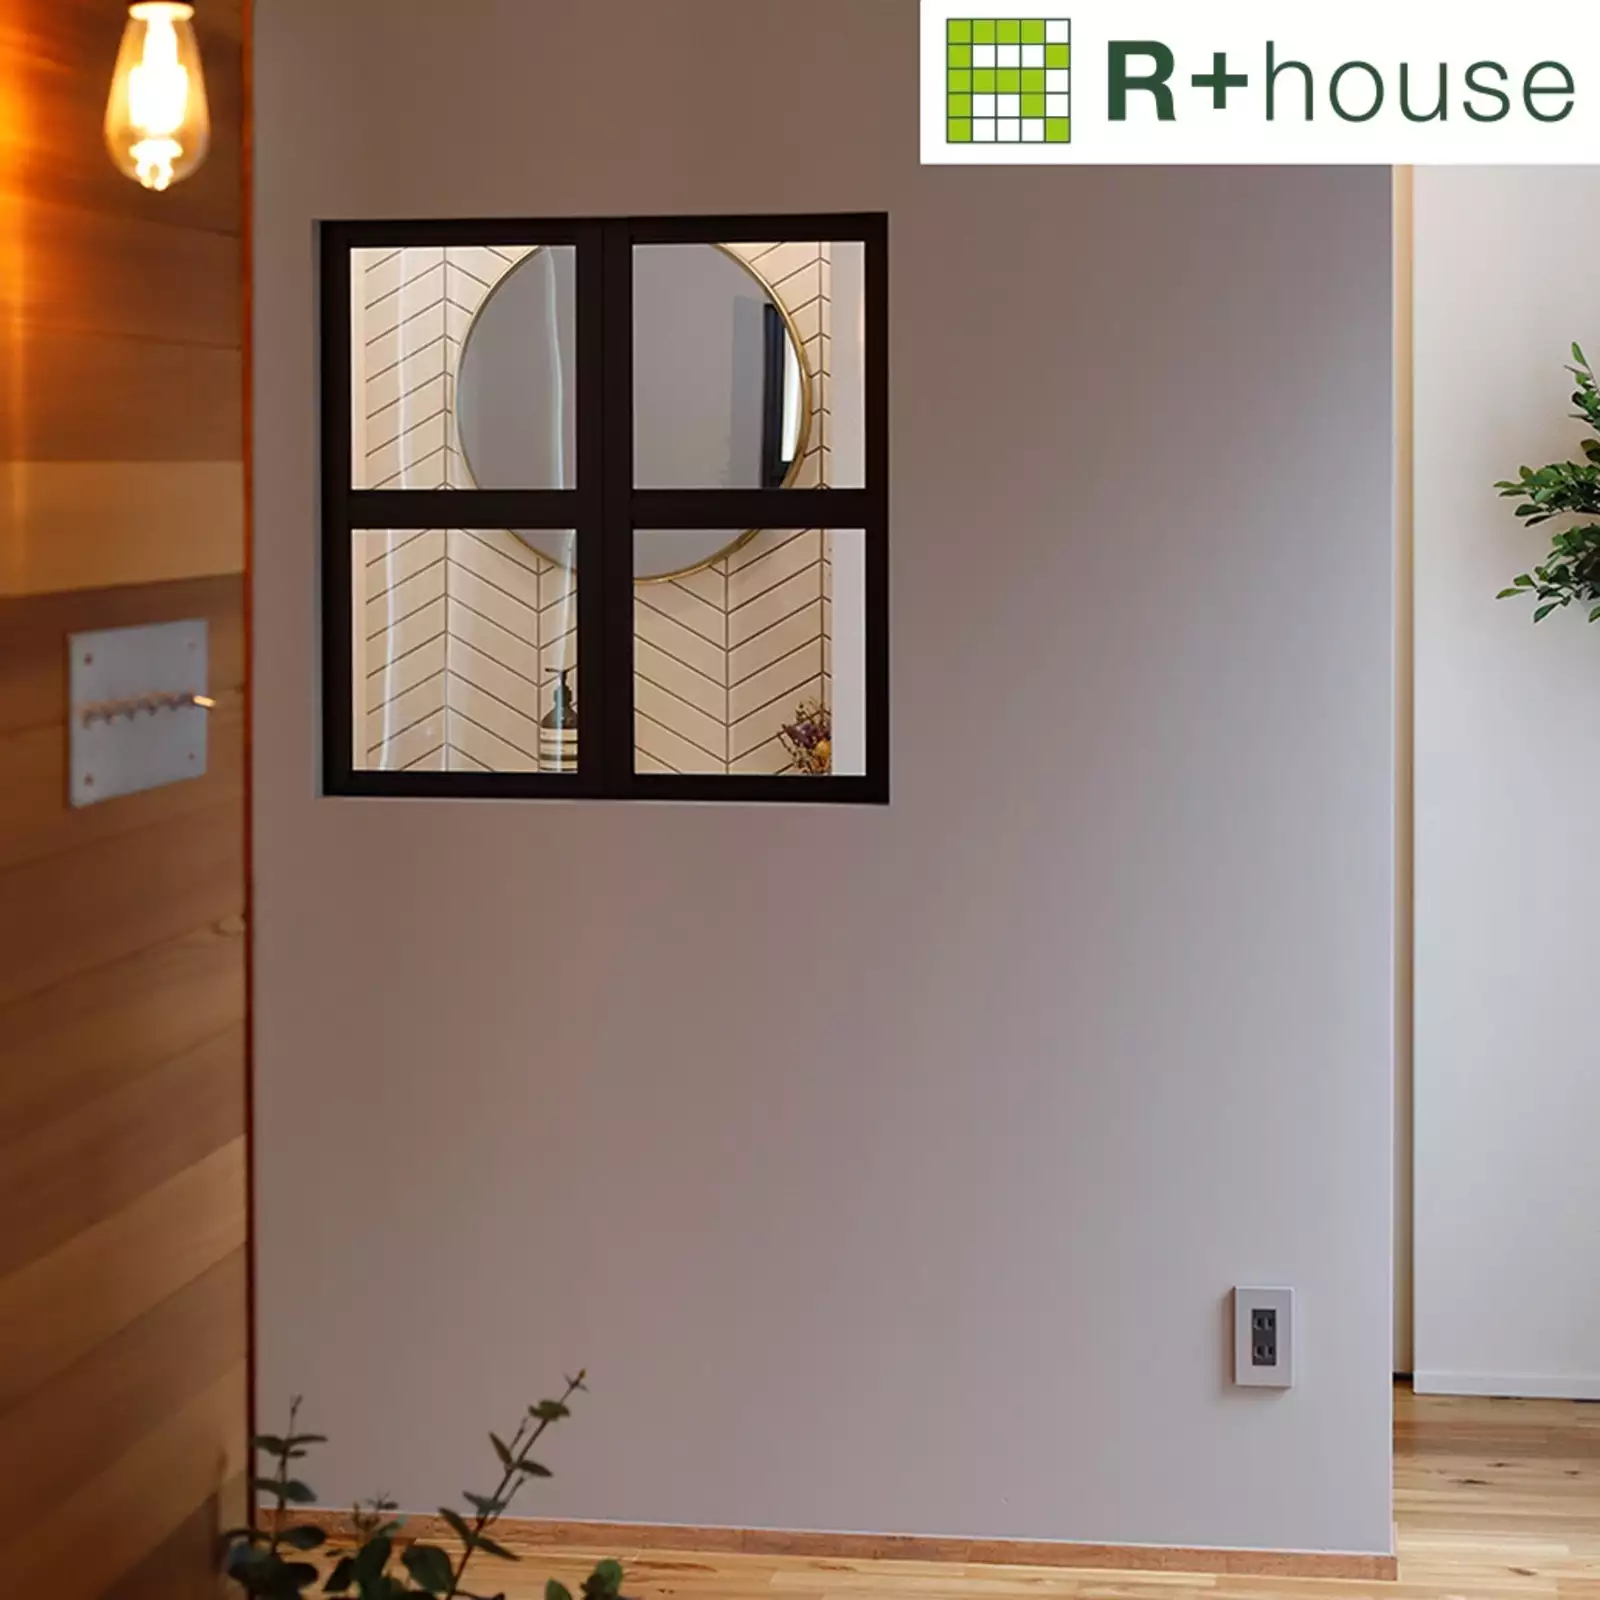 R+houseの物件の玄関からの写真です。玄関の壁はナチュラルな板張り。正面に見える白い壁におしゃれな黒の内窓。内窓から見えるのは洗面の丸鏡。